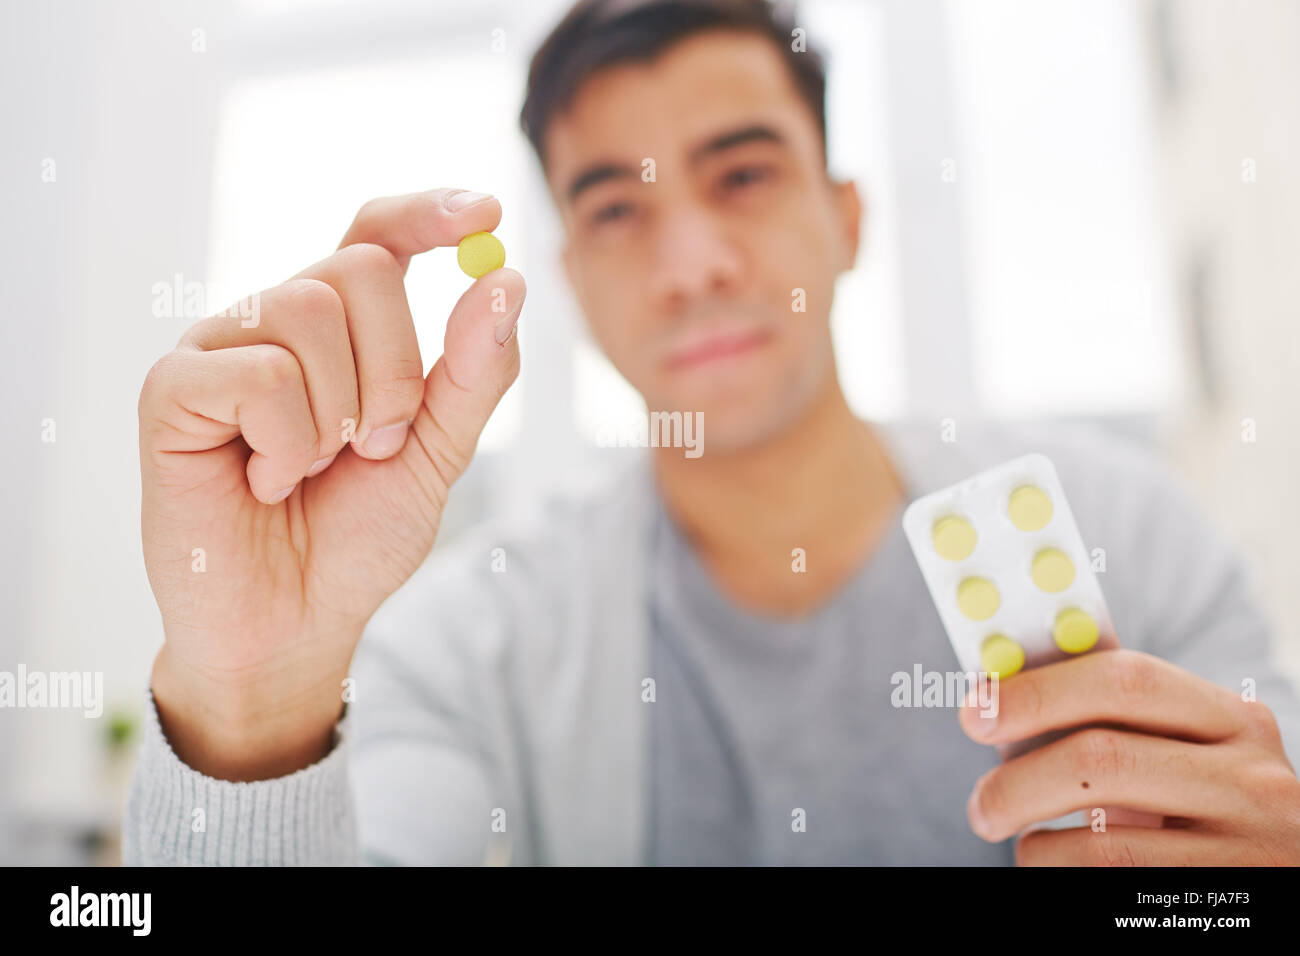 Junger Mann hält runde gelbe Pille Stockfoto